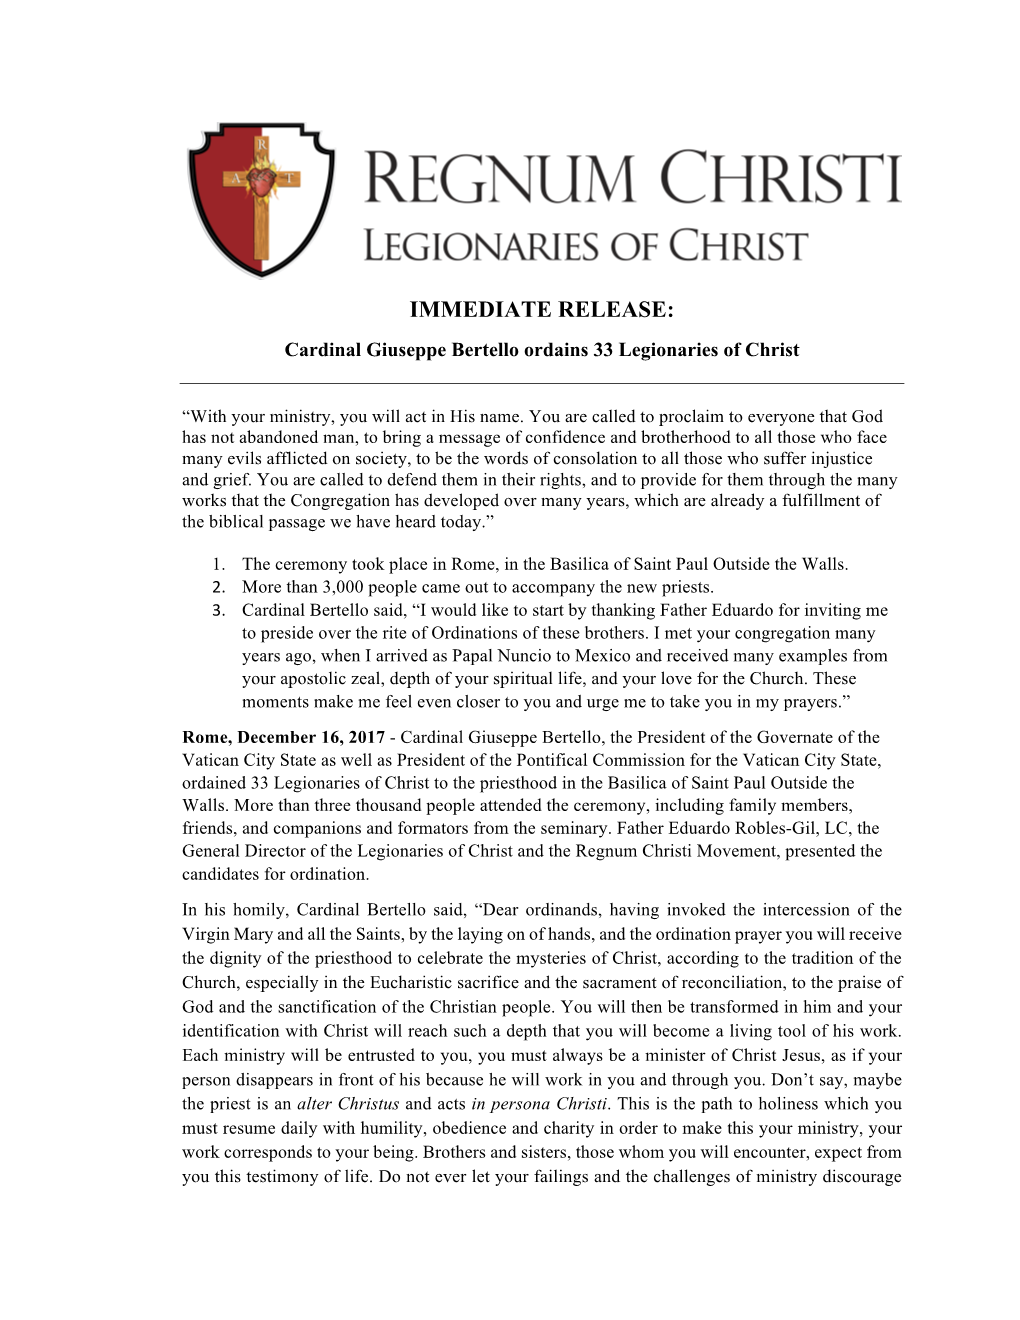 IMMEDIATE RELEASE: Cardinal Giuseppe Bertello Ordains 33 Legionaries of Christ